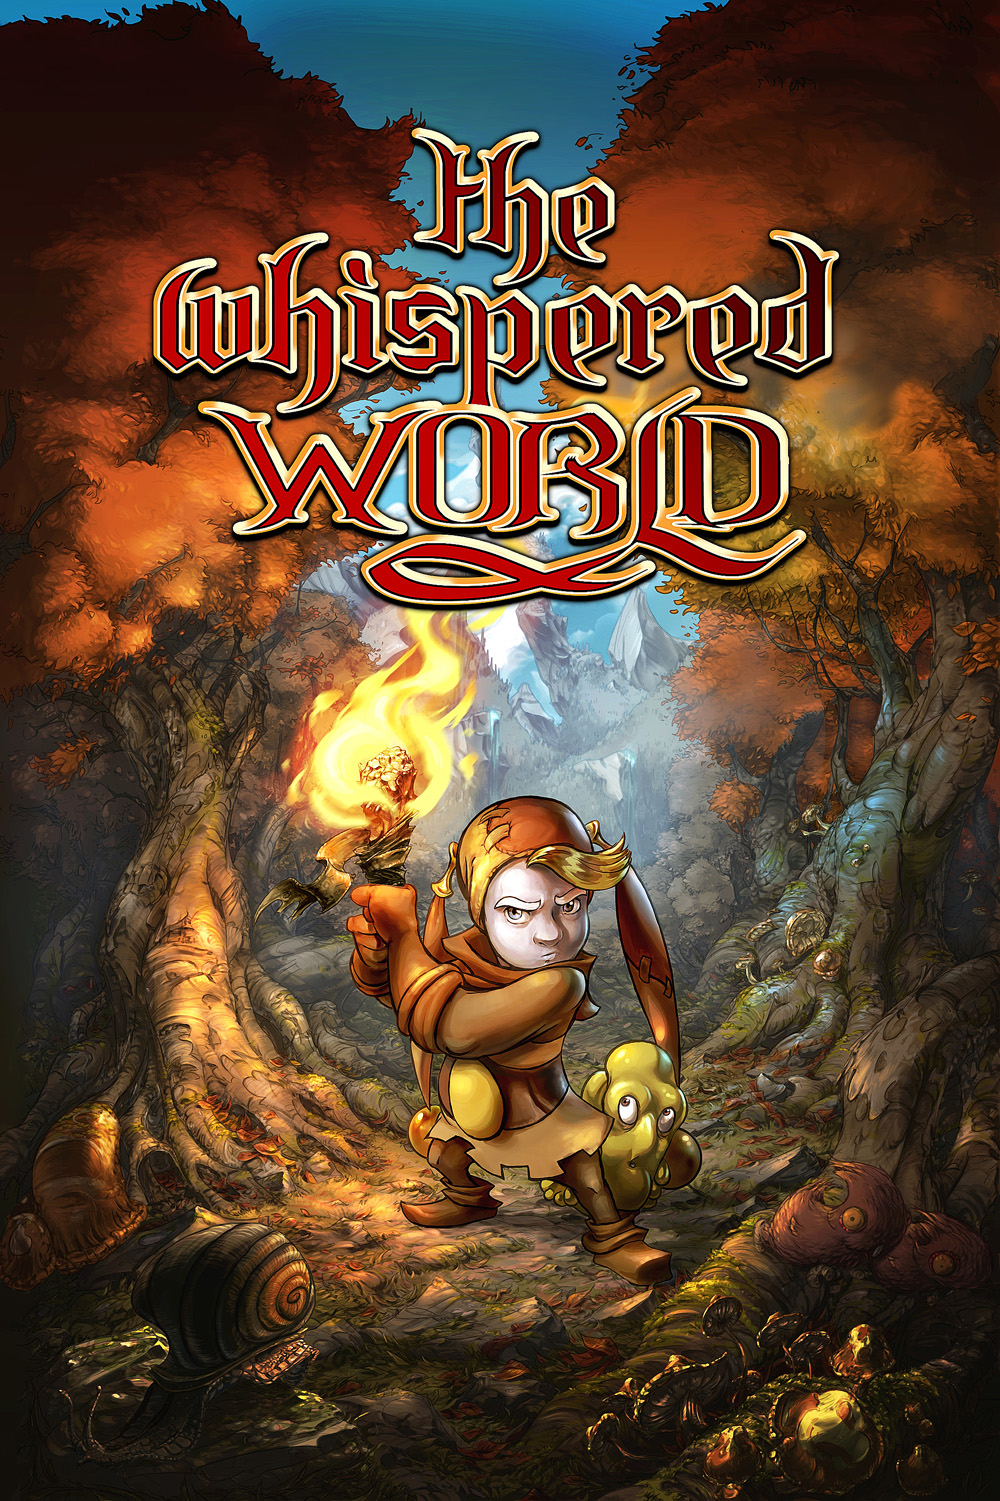 The Whispered World - demo